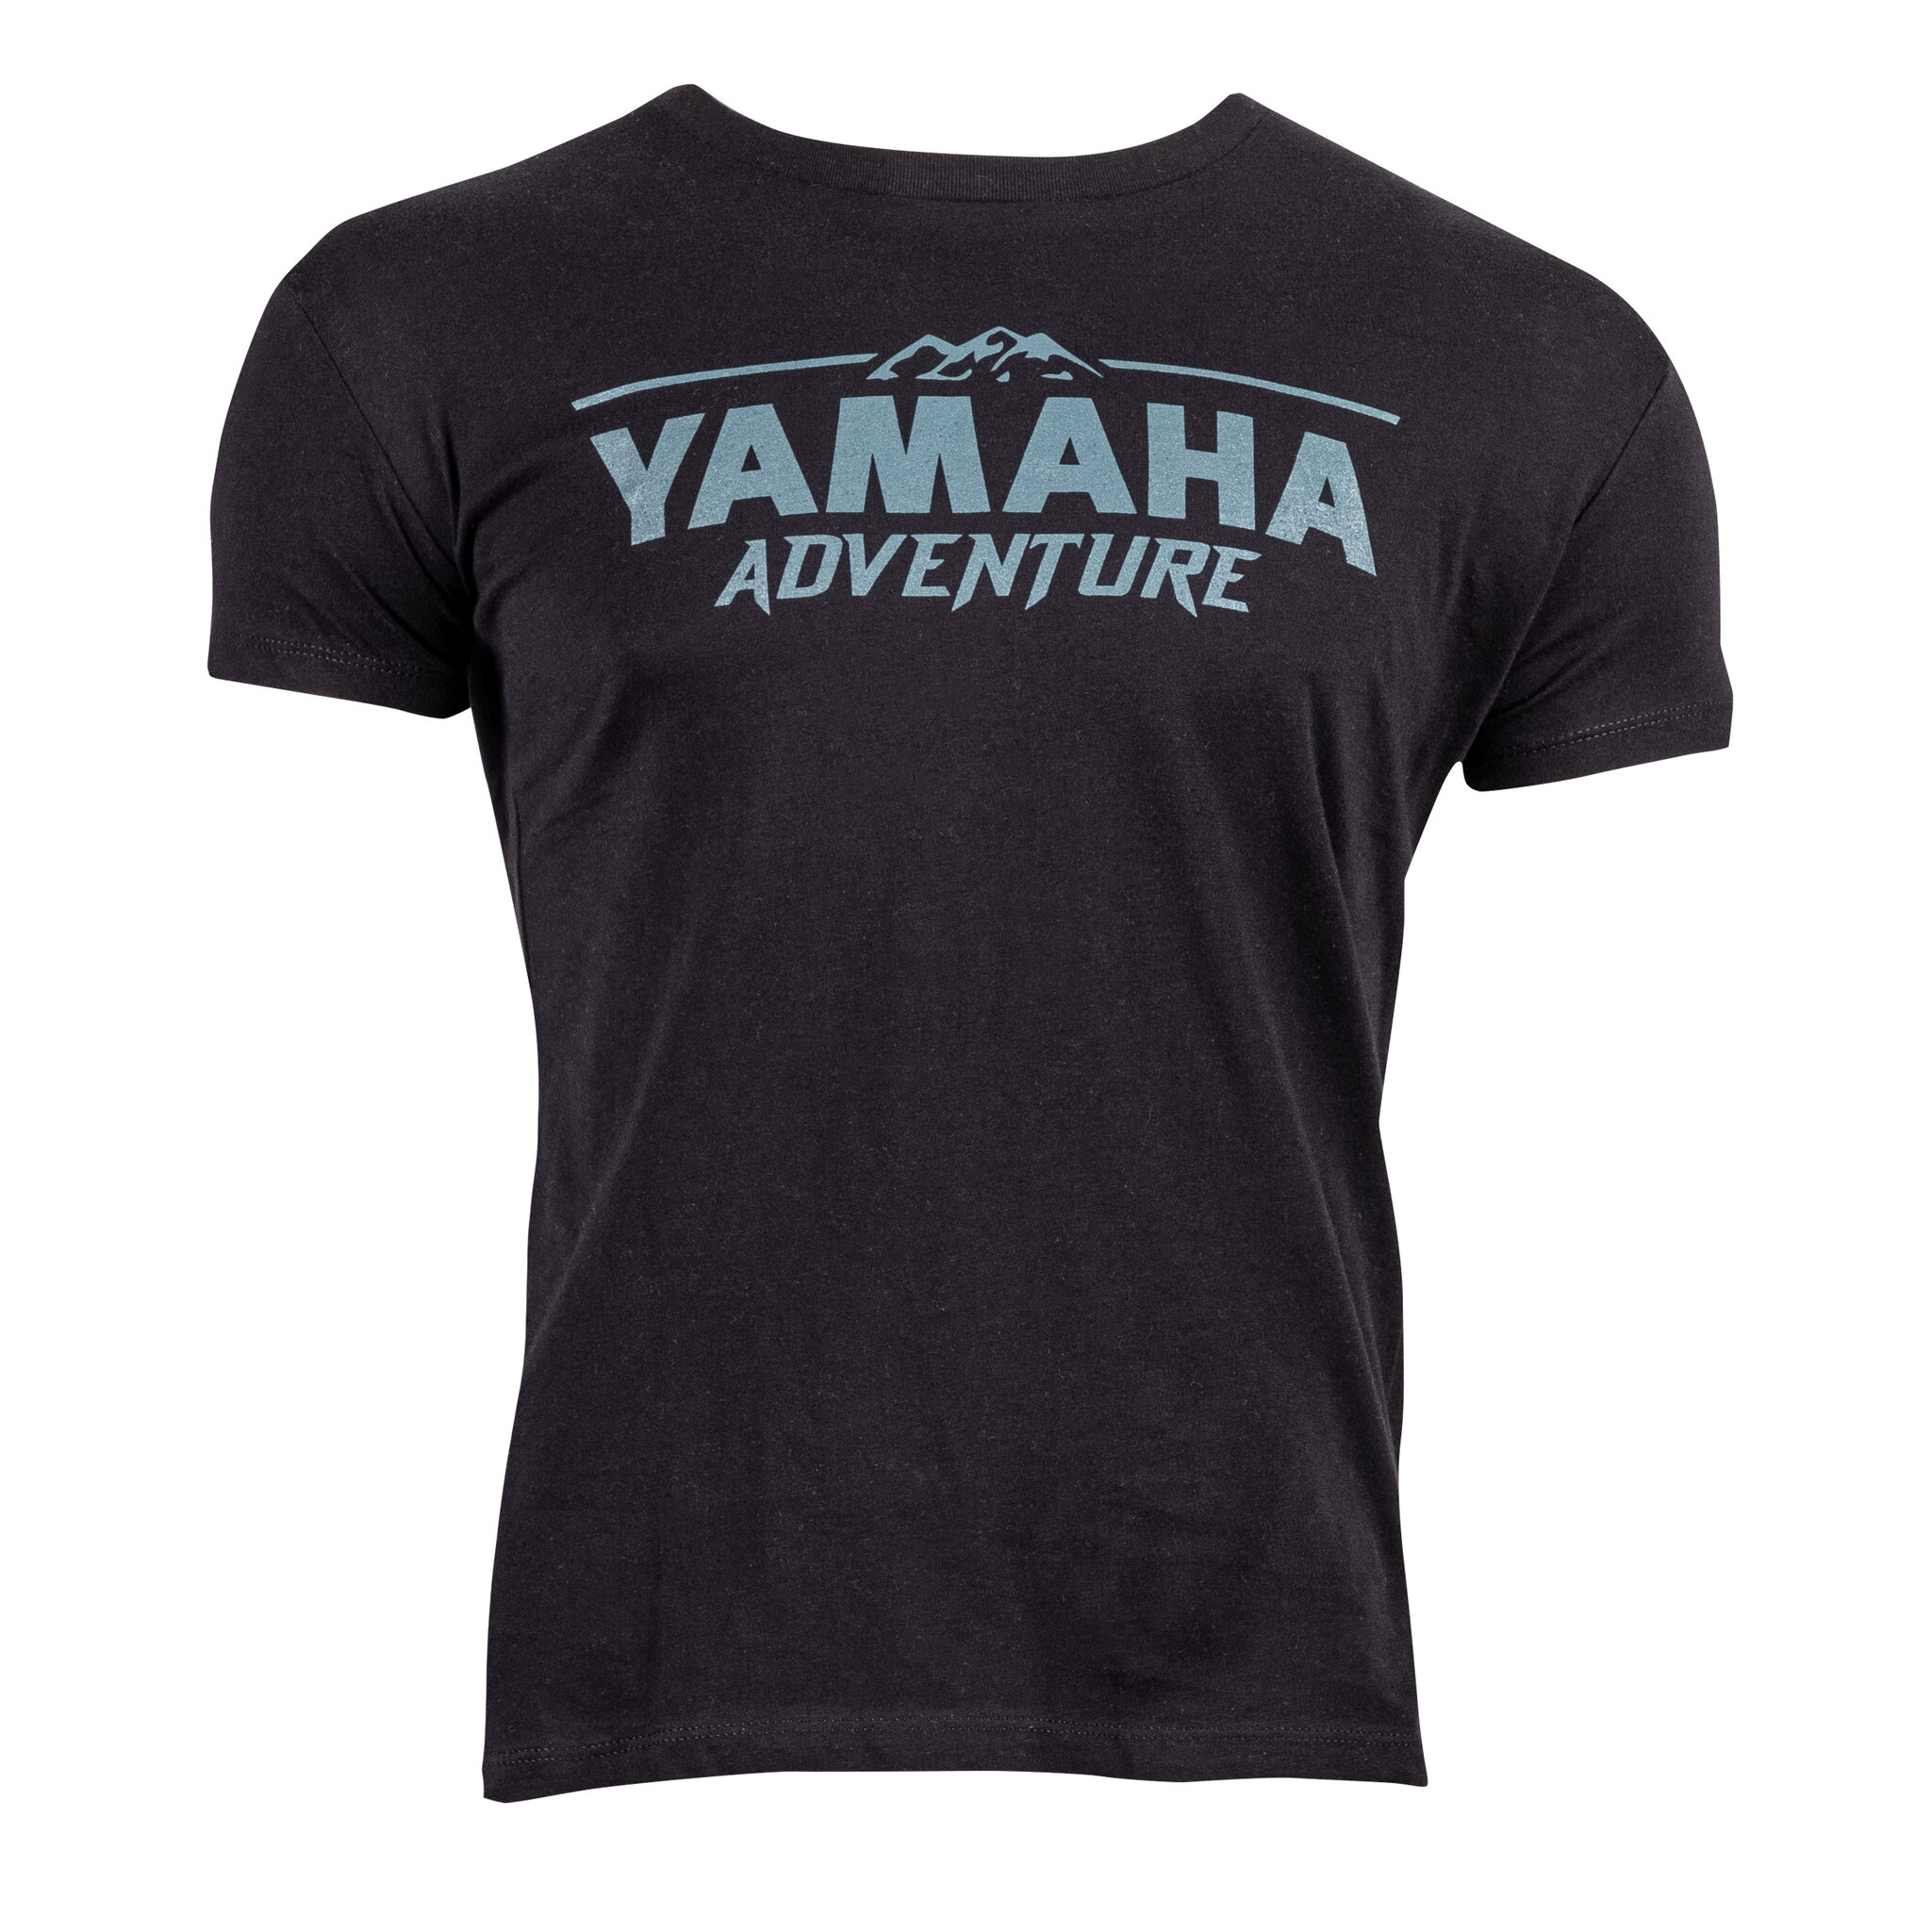 Yamaha Adventure Women's T Shirt Large black